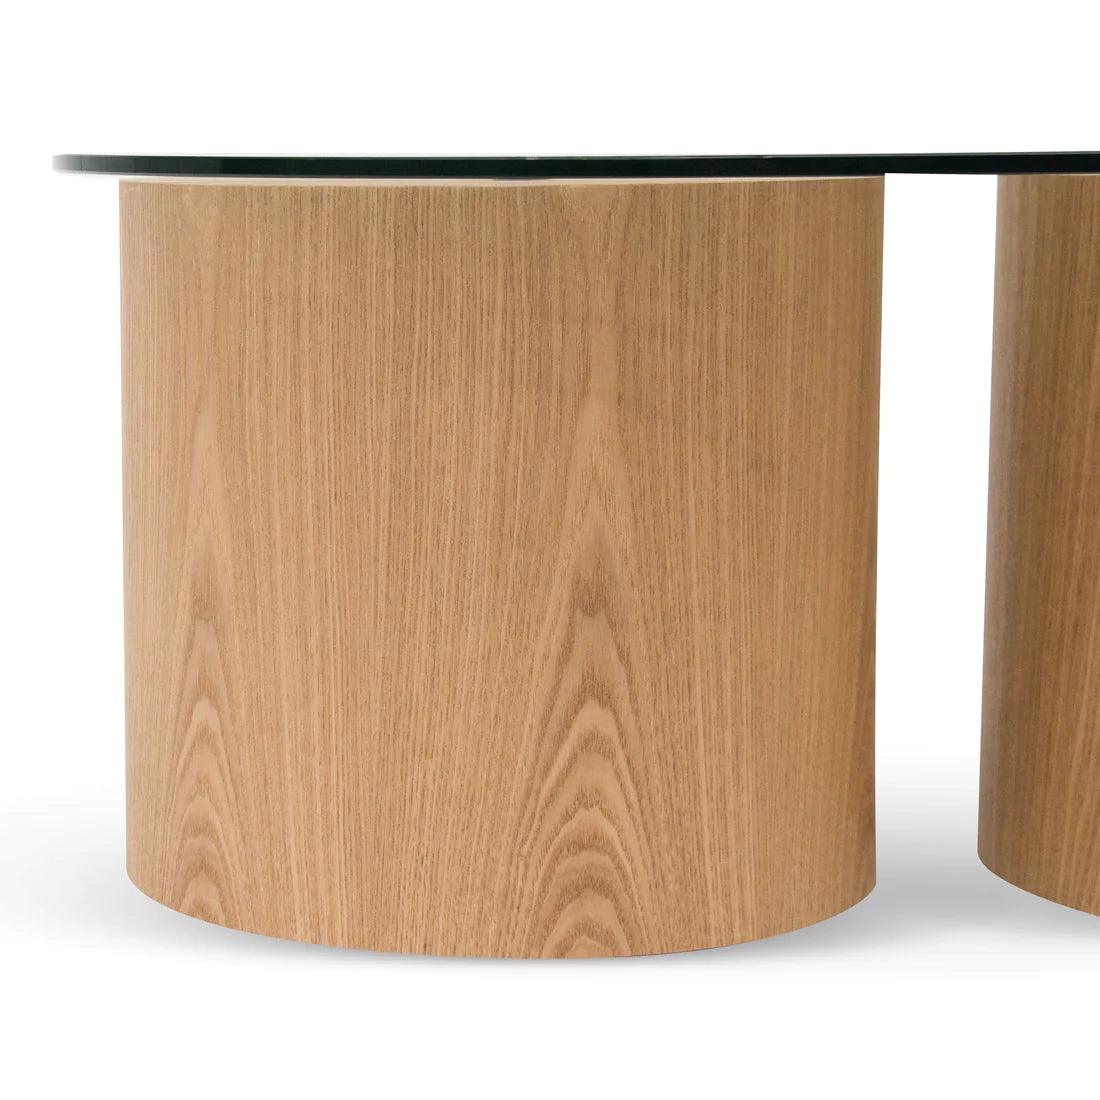 Leo Trio Block 1.4m Oval Glass Coffee Table - Natural - Furniture Castle